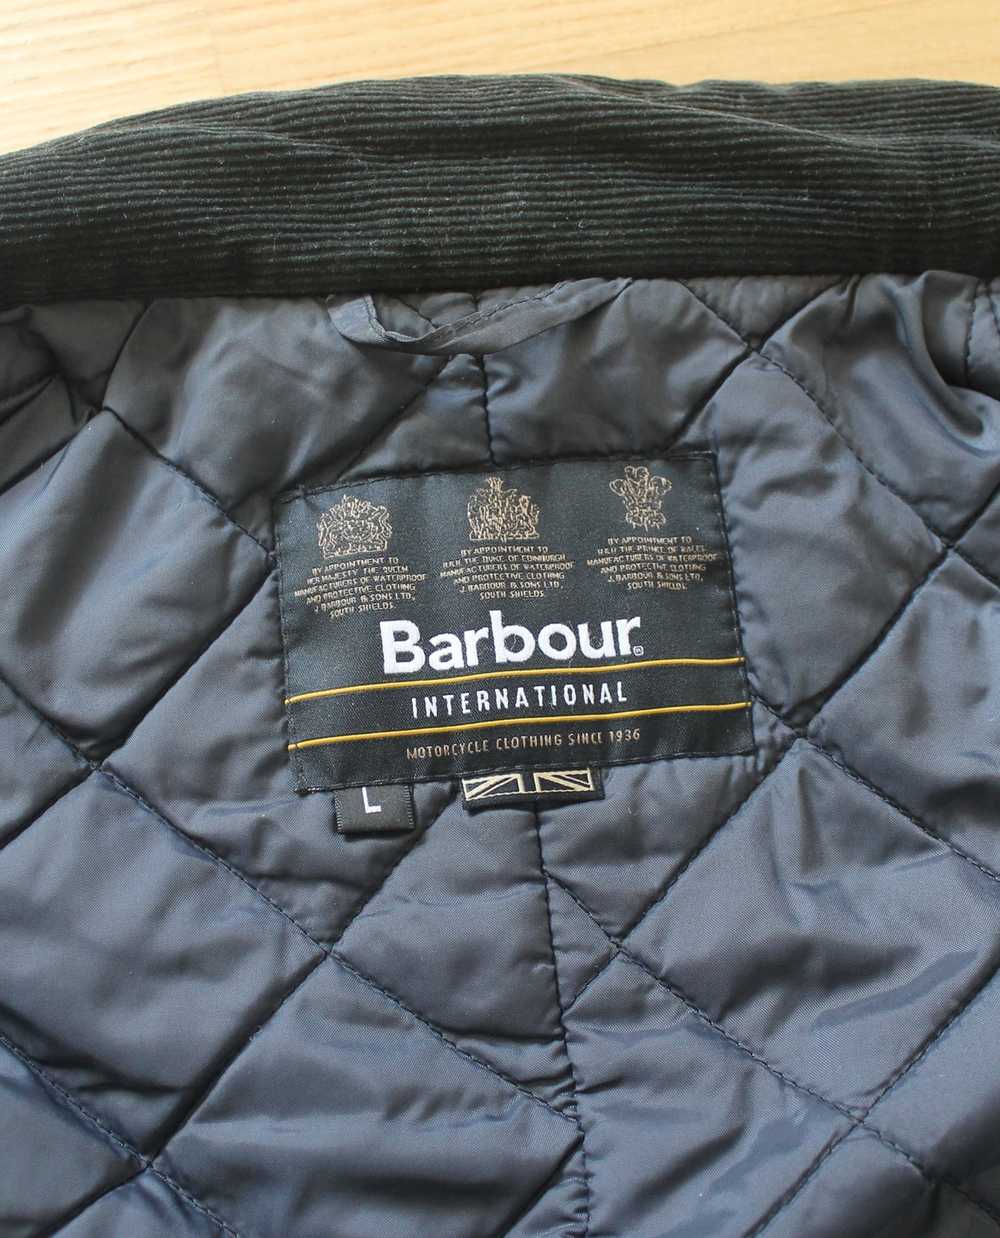 Barbour Barbour International Duke Wax Jacket - image 9